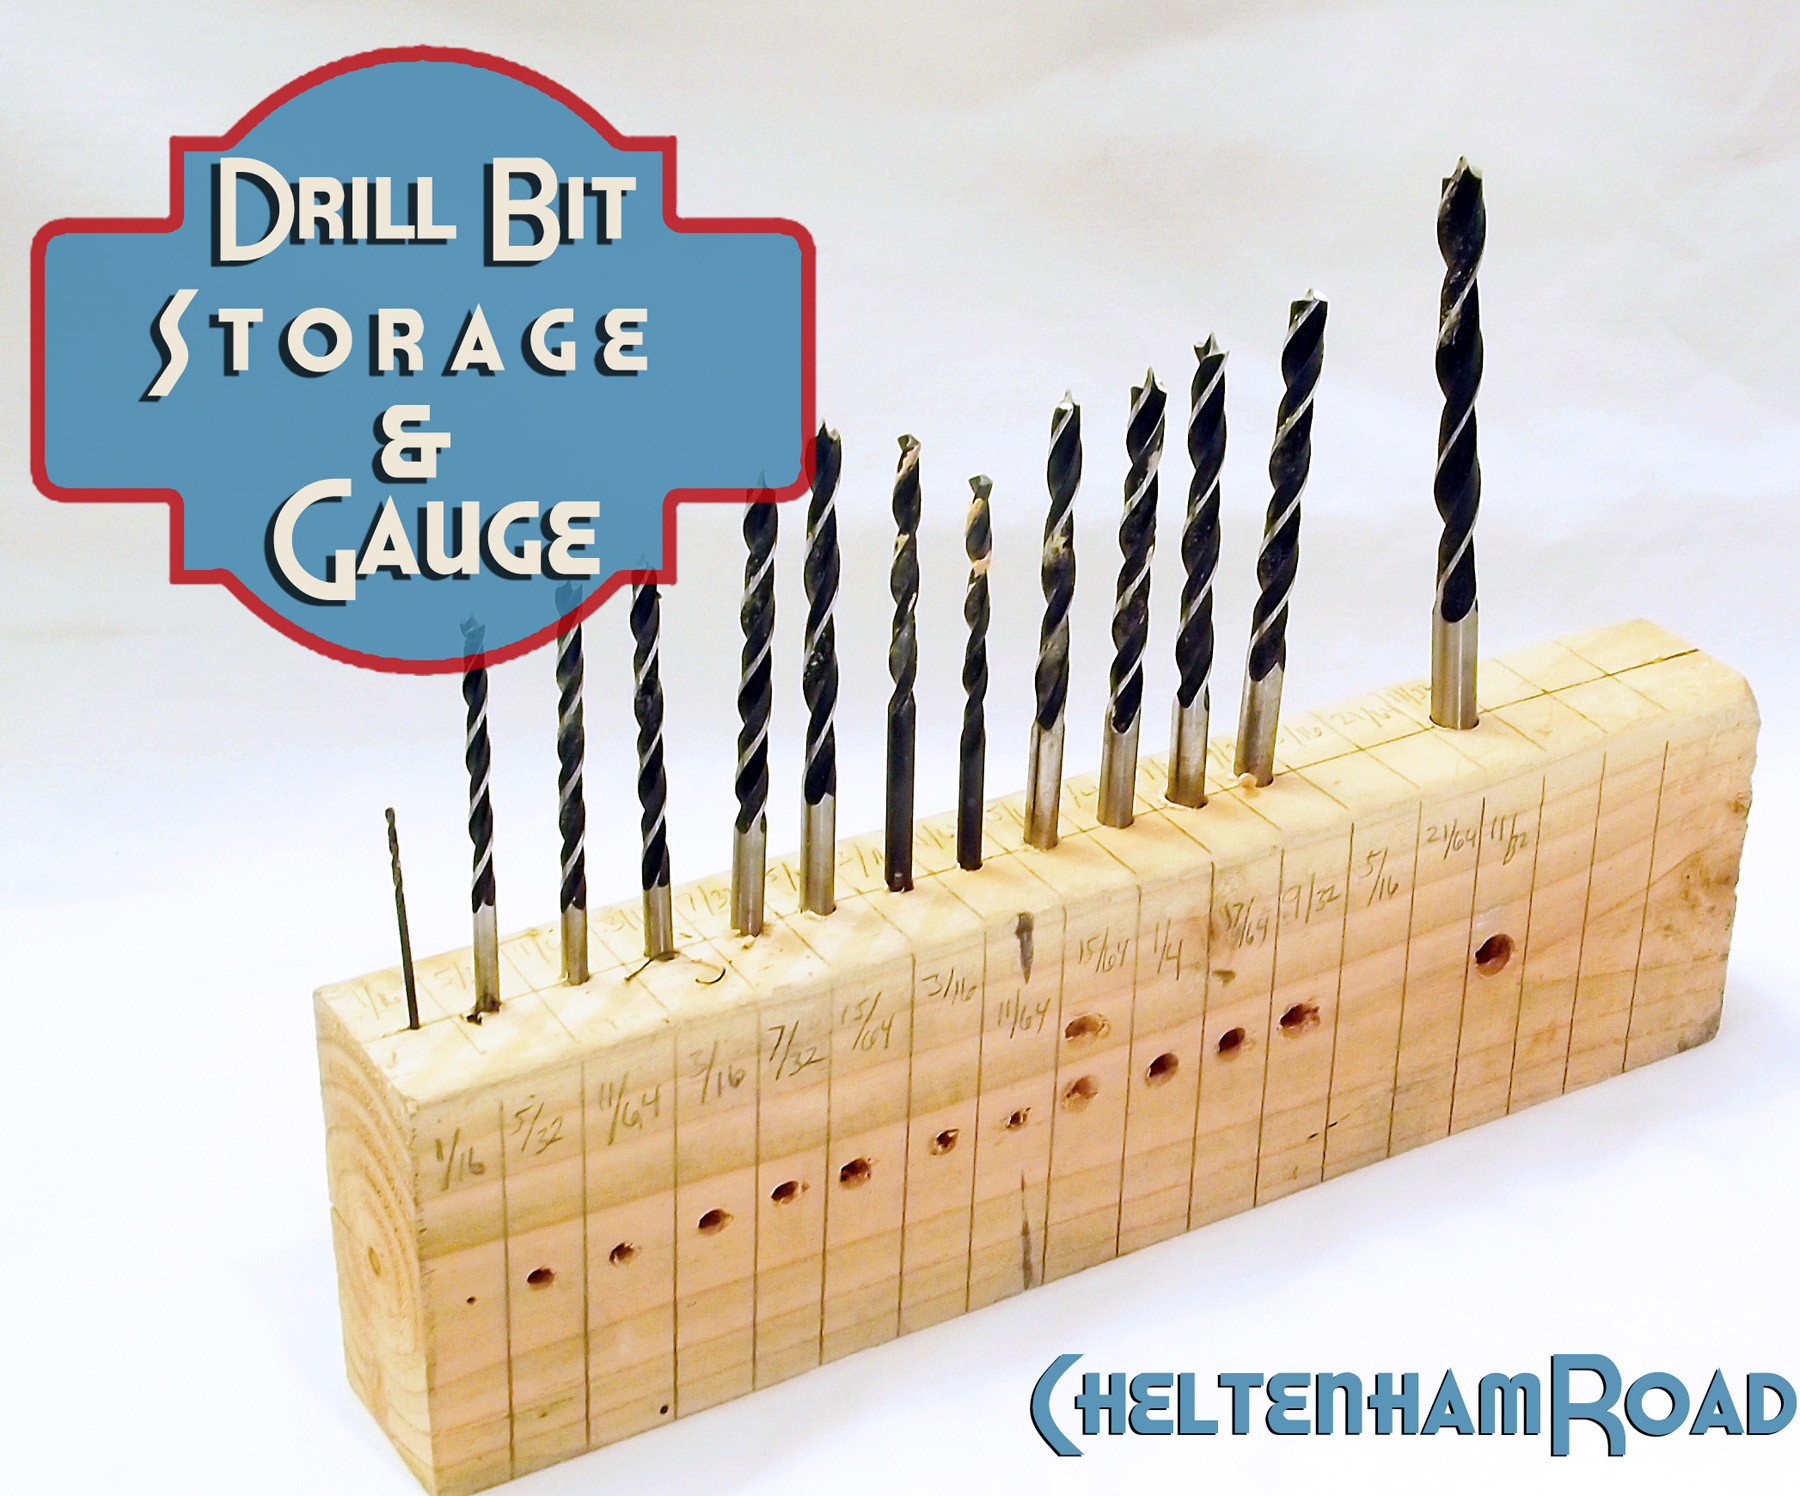 Best ideas about DIY Drill Bit Organizer
. Save or Pin Tutorial Drill Bit Storage and Gauge Now.